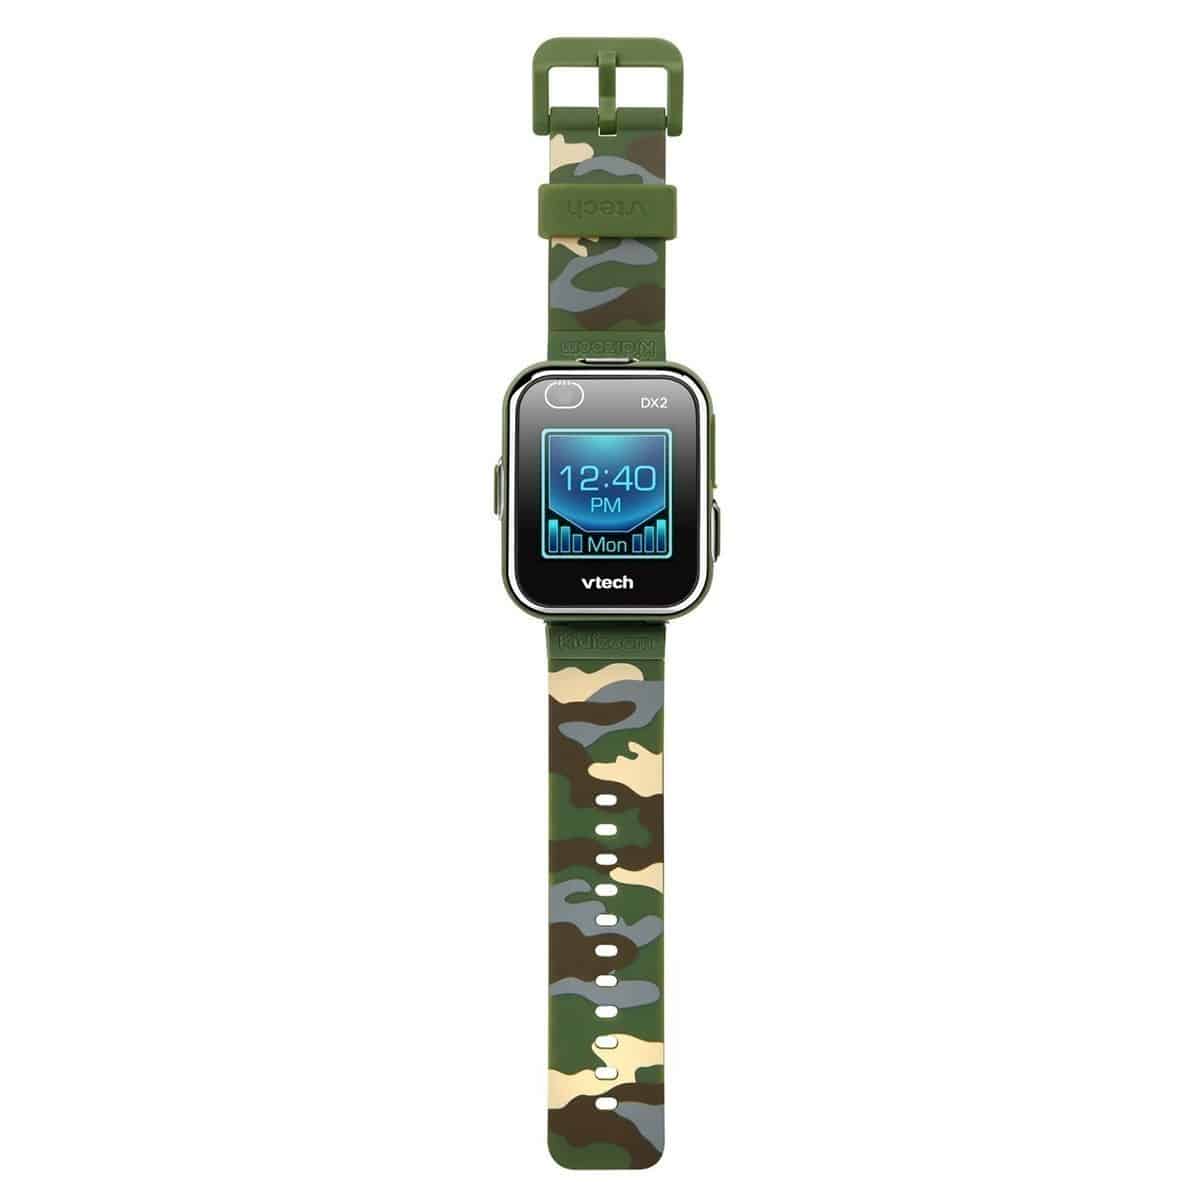 Vtech - Kidizoom Smart Watch DX 2 - Camouflage